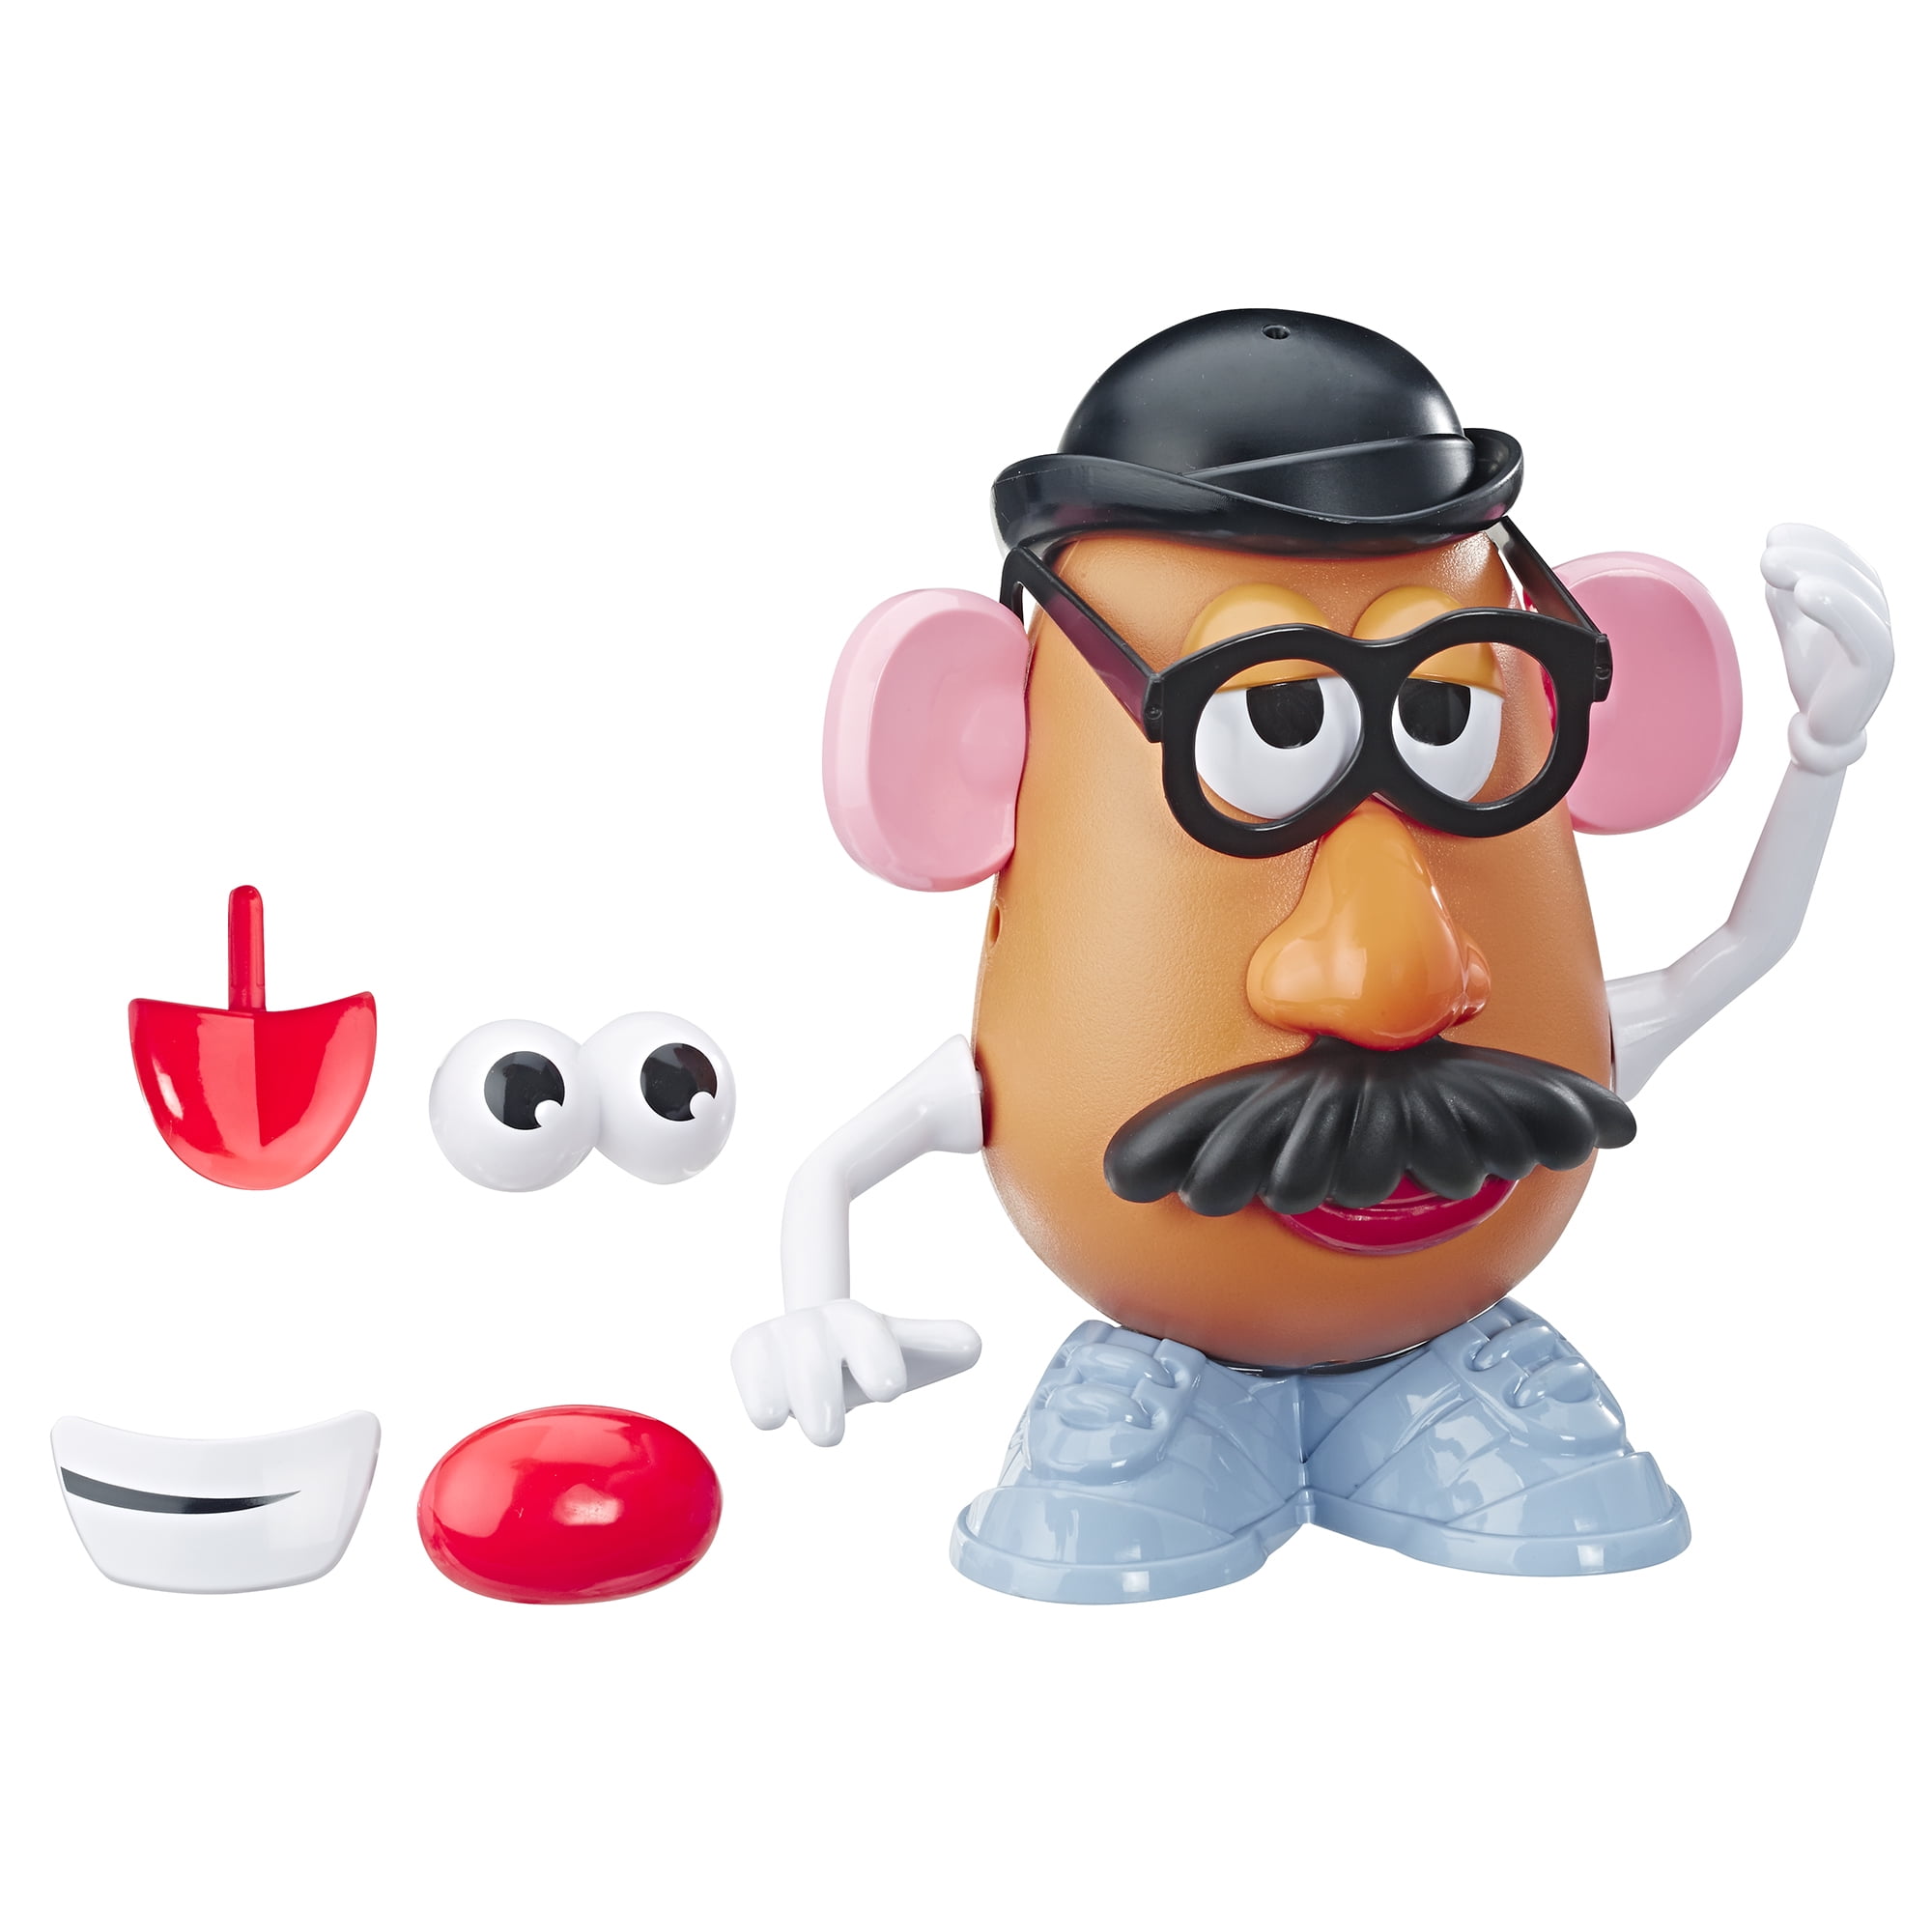 Mr Potato Head Disney Pixar Toy Story 4 Classic Mr Potato Head Figure Toy Walmart Com Walmart Com